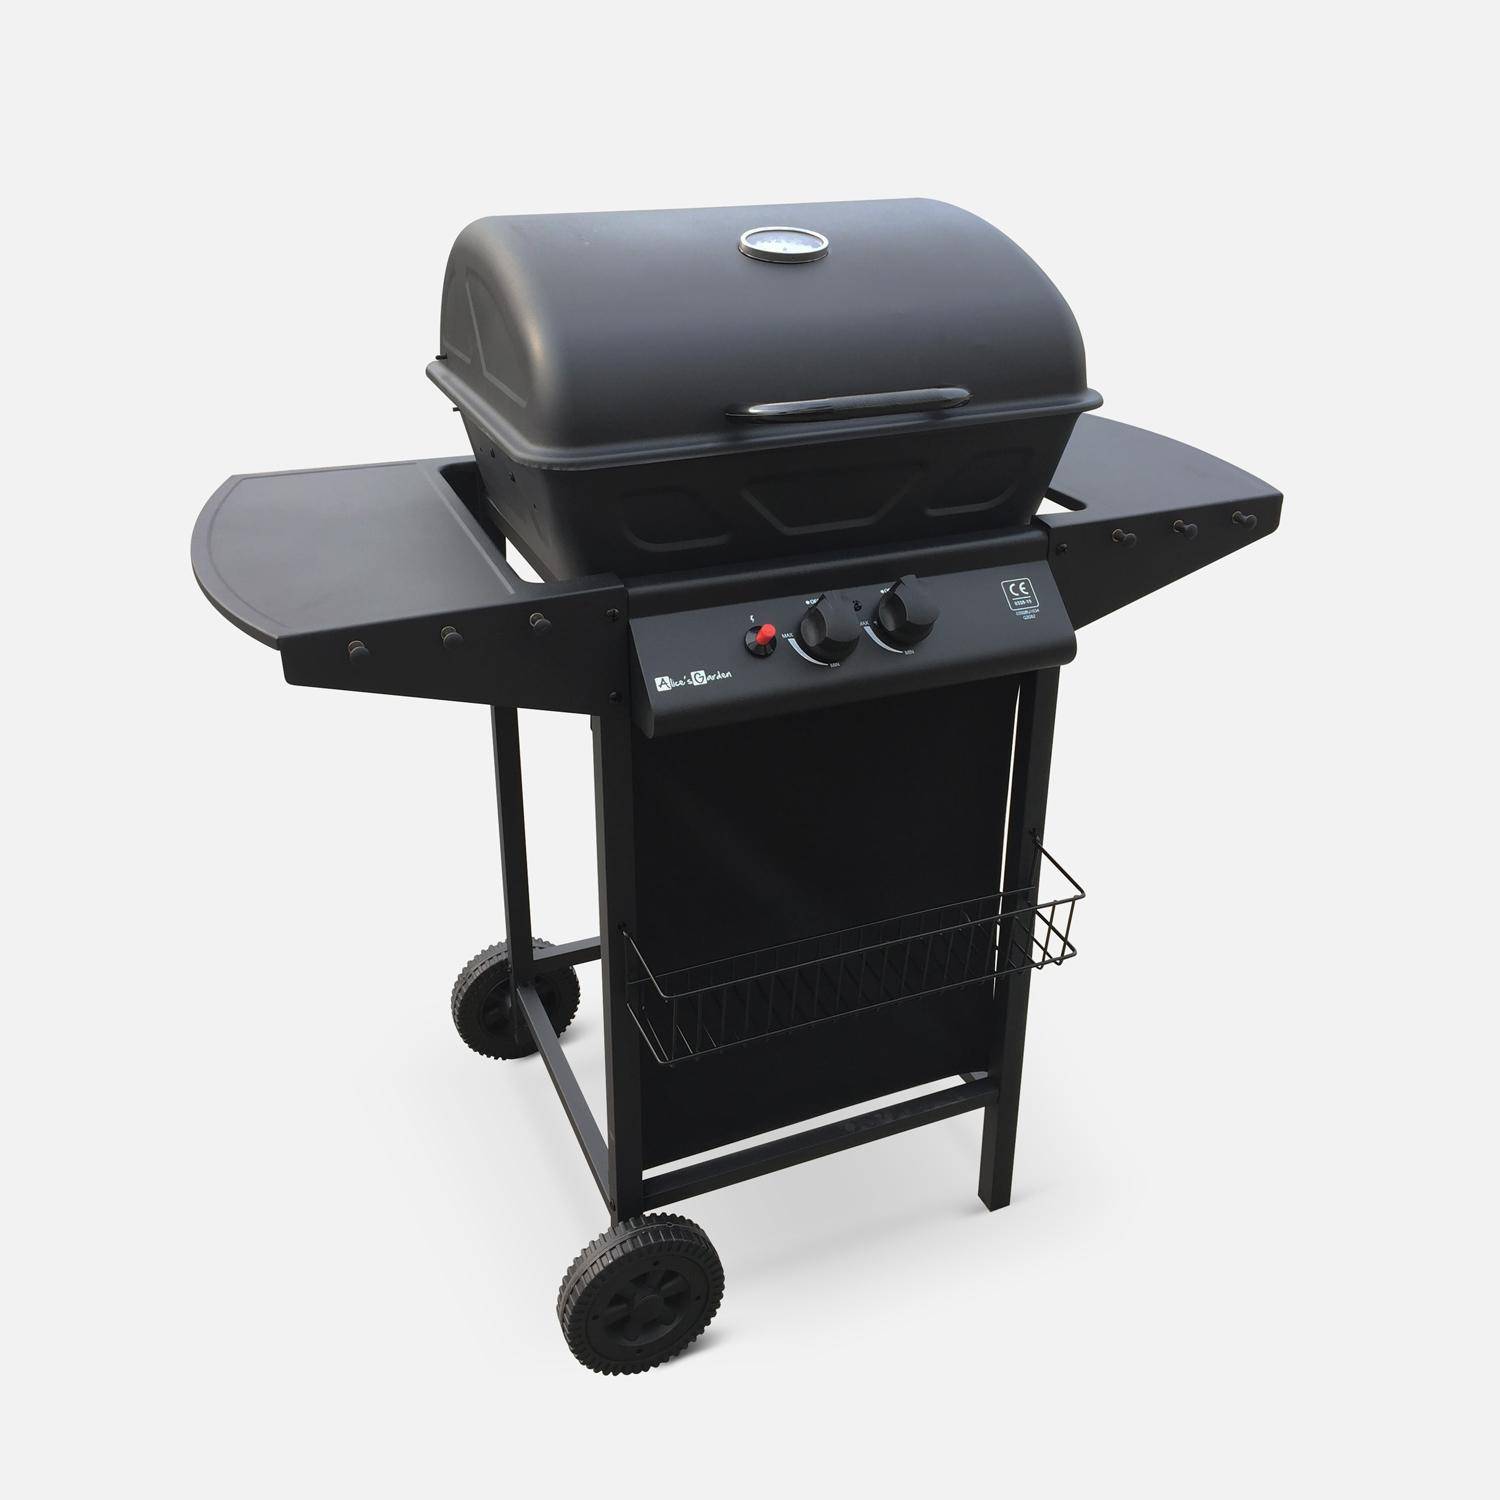 Barbecue a gás, churrasqueira, cozinha de exterior, preto, 2 queimadores - Aramis,sweeek,Photo3